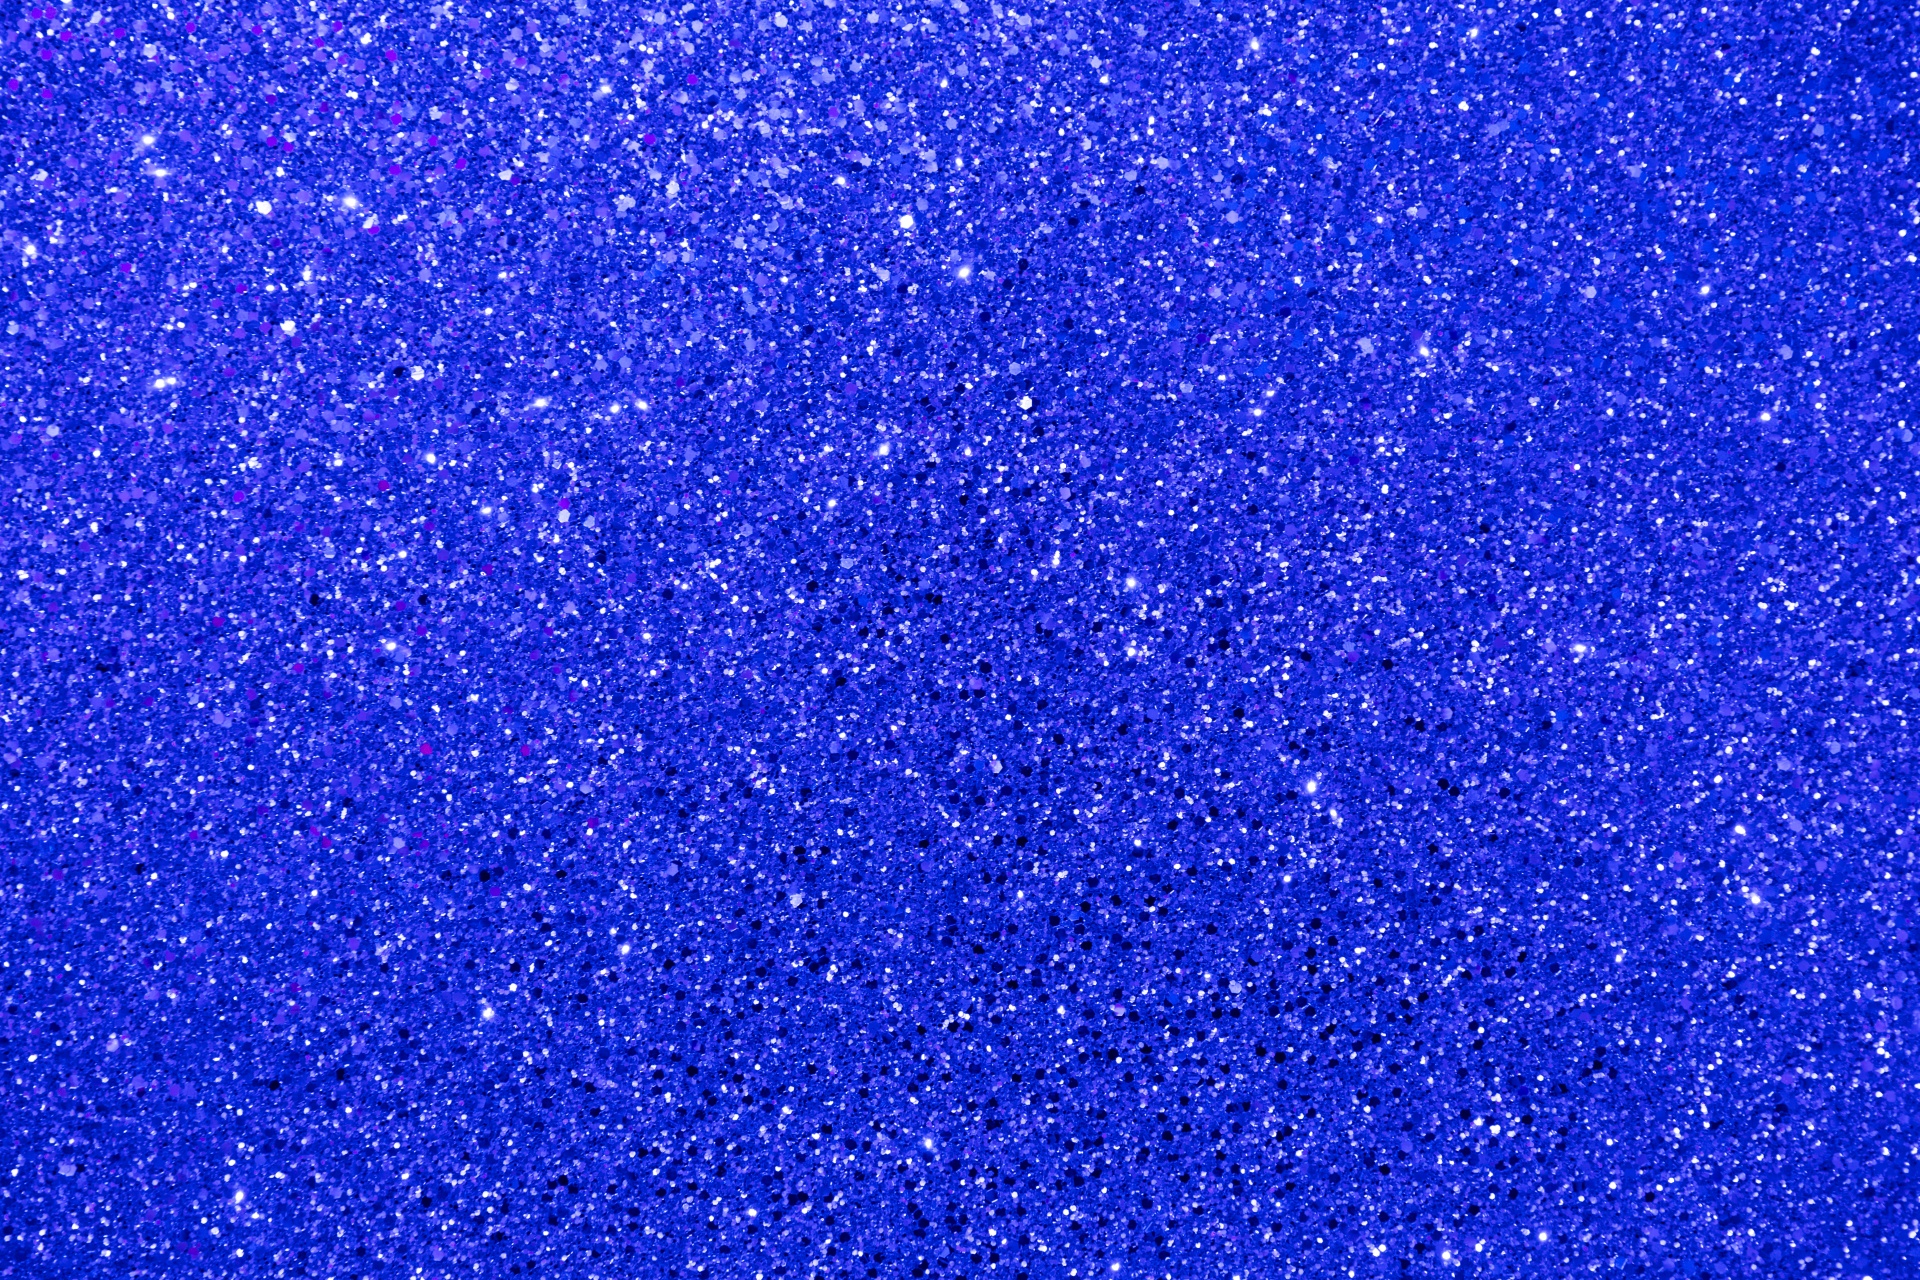 royal blue sparkle background